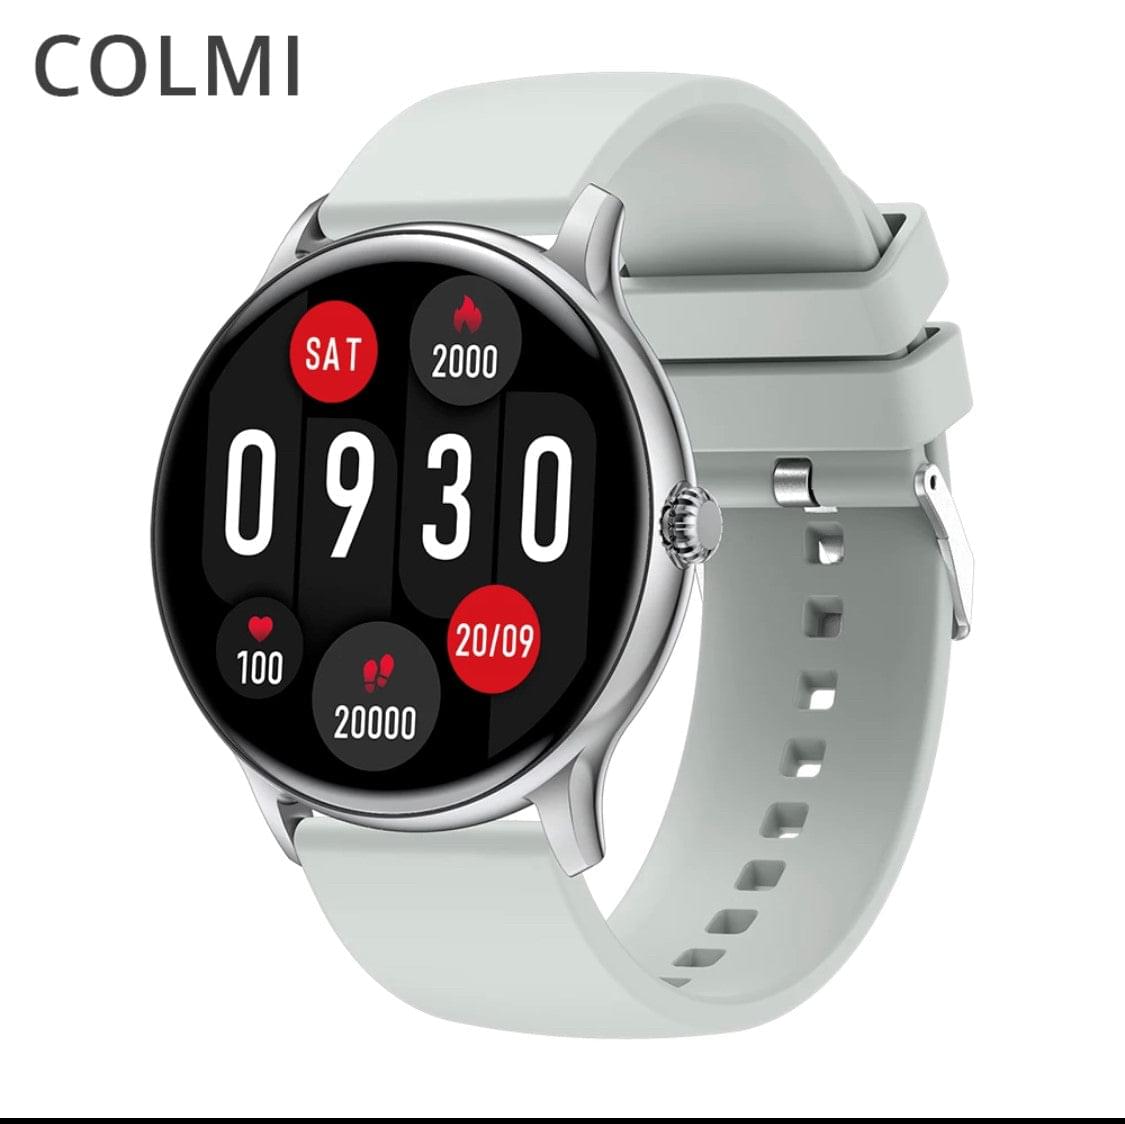 Colmi i10 Black Smart Watch South Africa